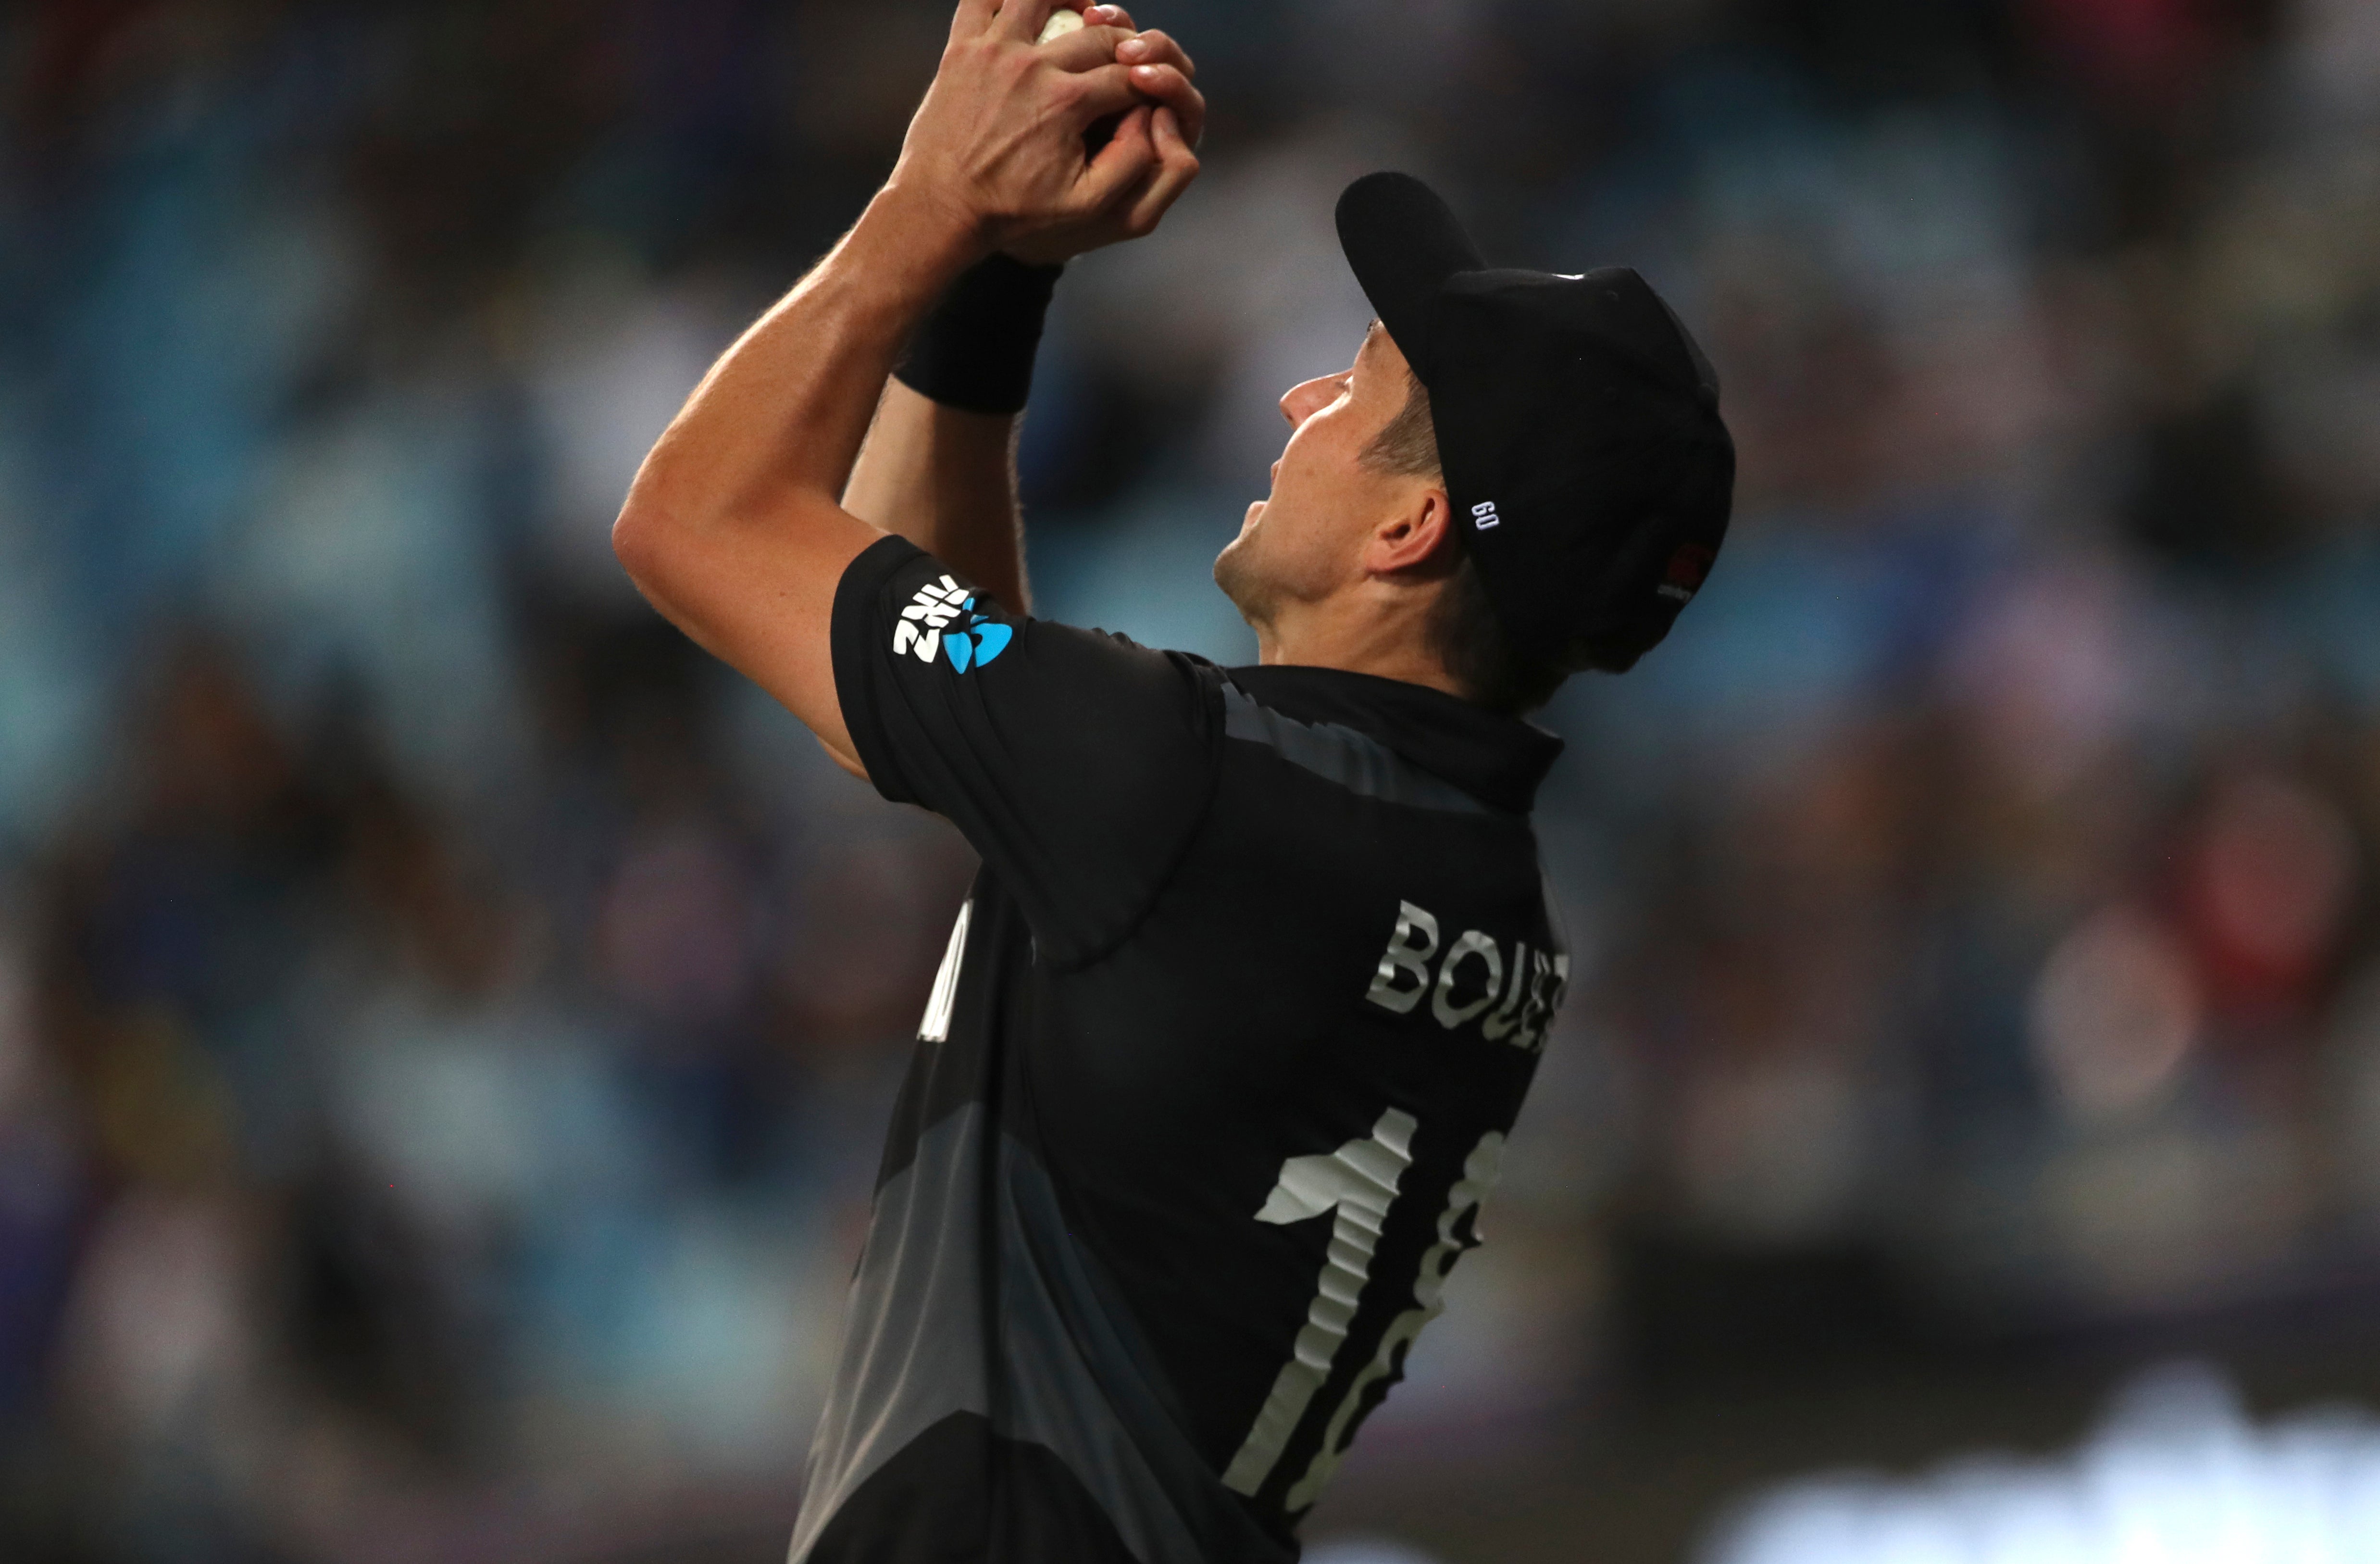 Trent Boult takes the catch to dismiss India captain Virat Kohli as New Zealand beat India (Aijaz Rahi/AP)